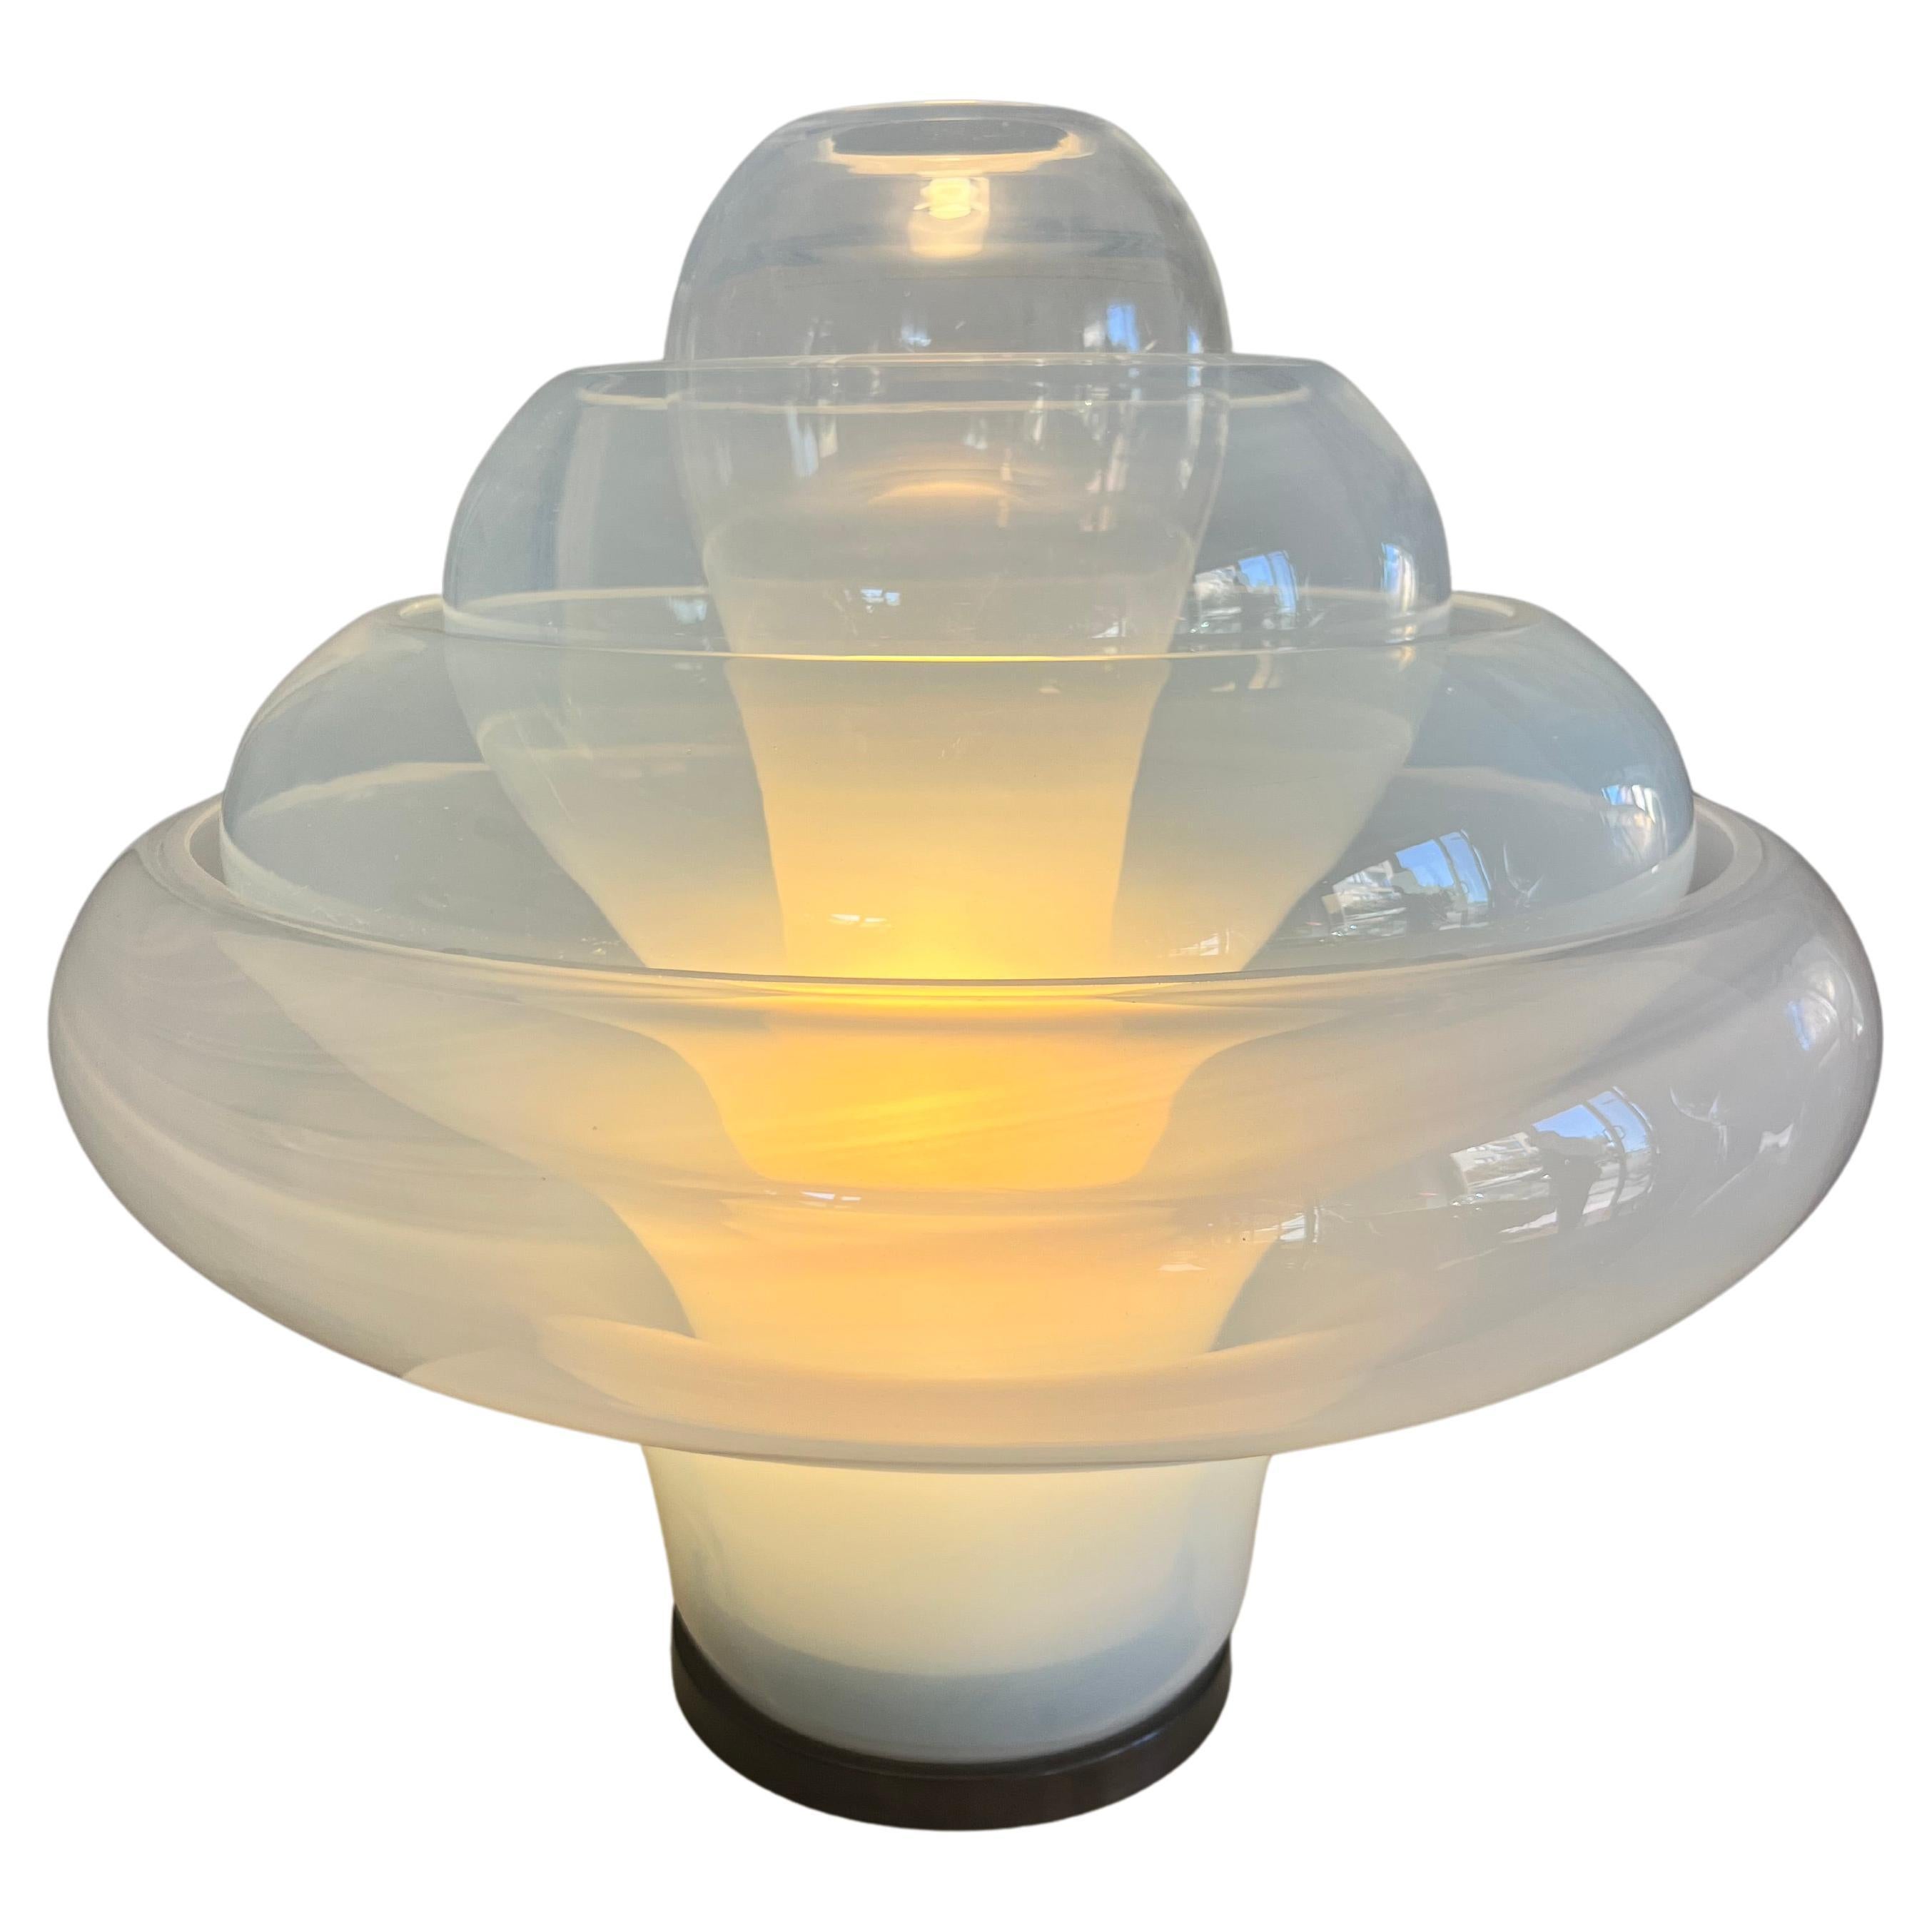 Lotus Lamp Carlo Nason Mazzega LT305 ORIGINAL